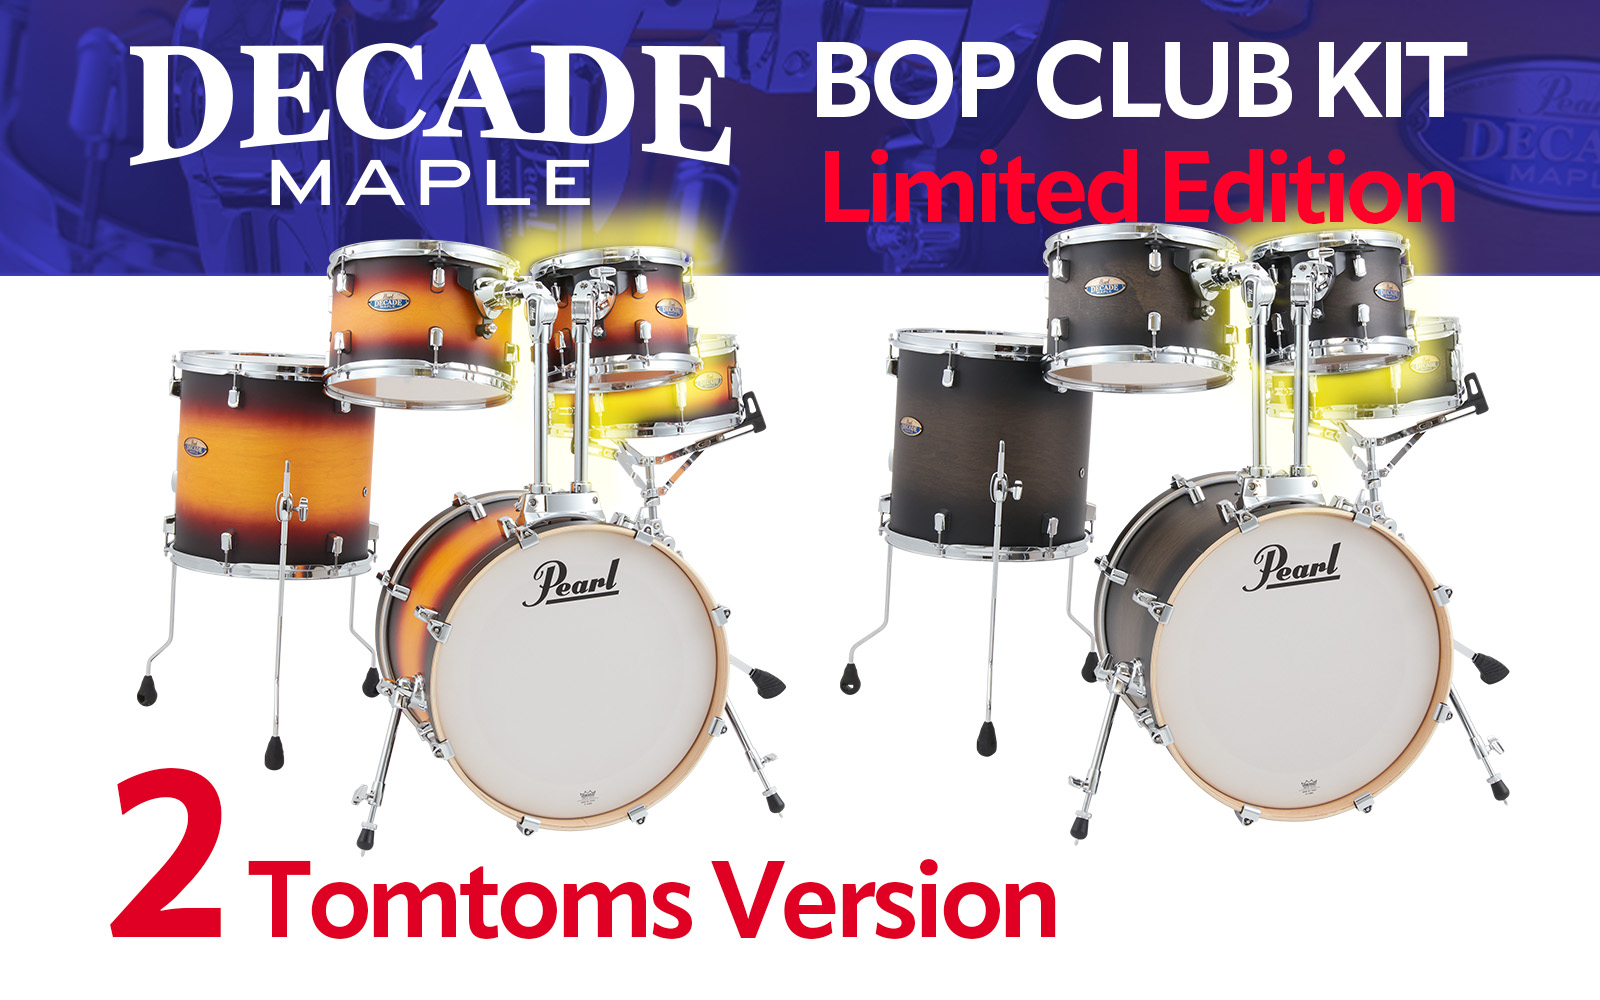 DECADE MAPLE BOP CLUB KIT ～Limited Edition “2タムバージョン 